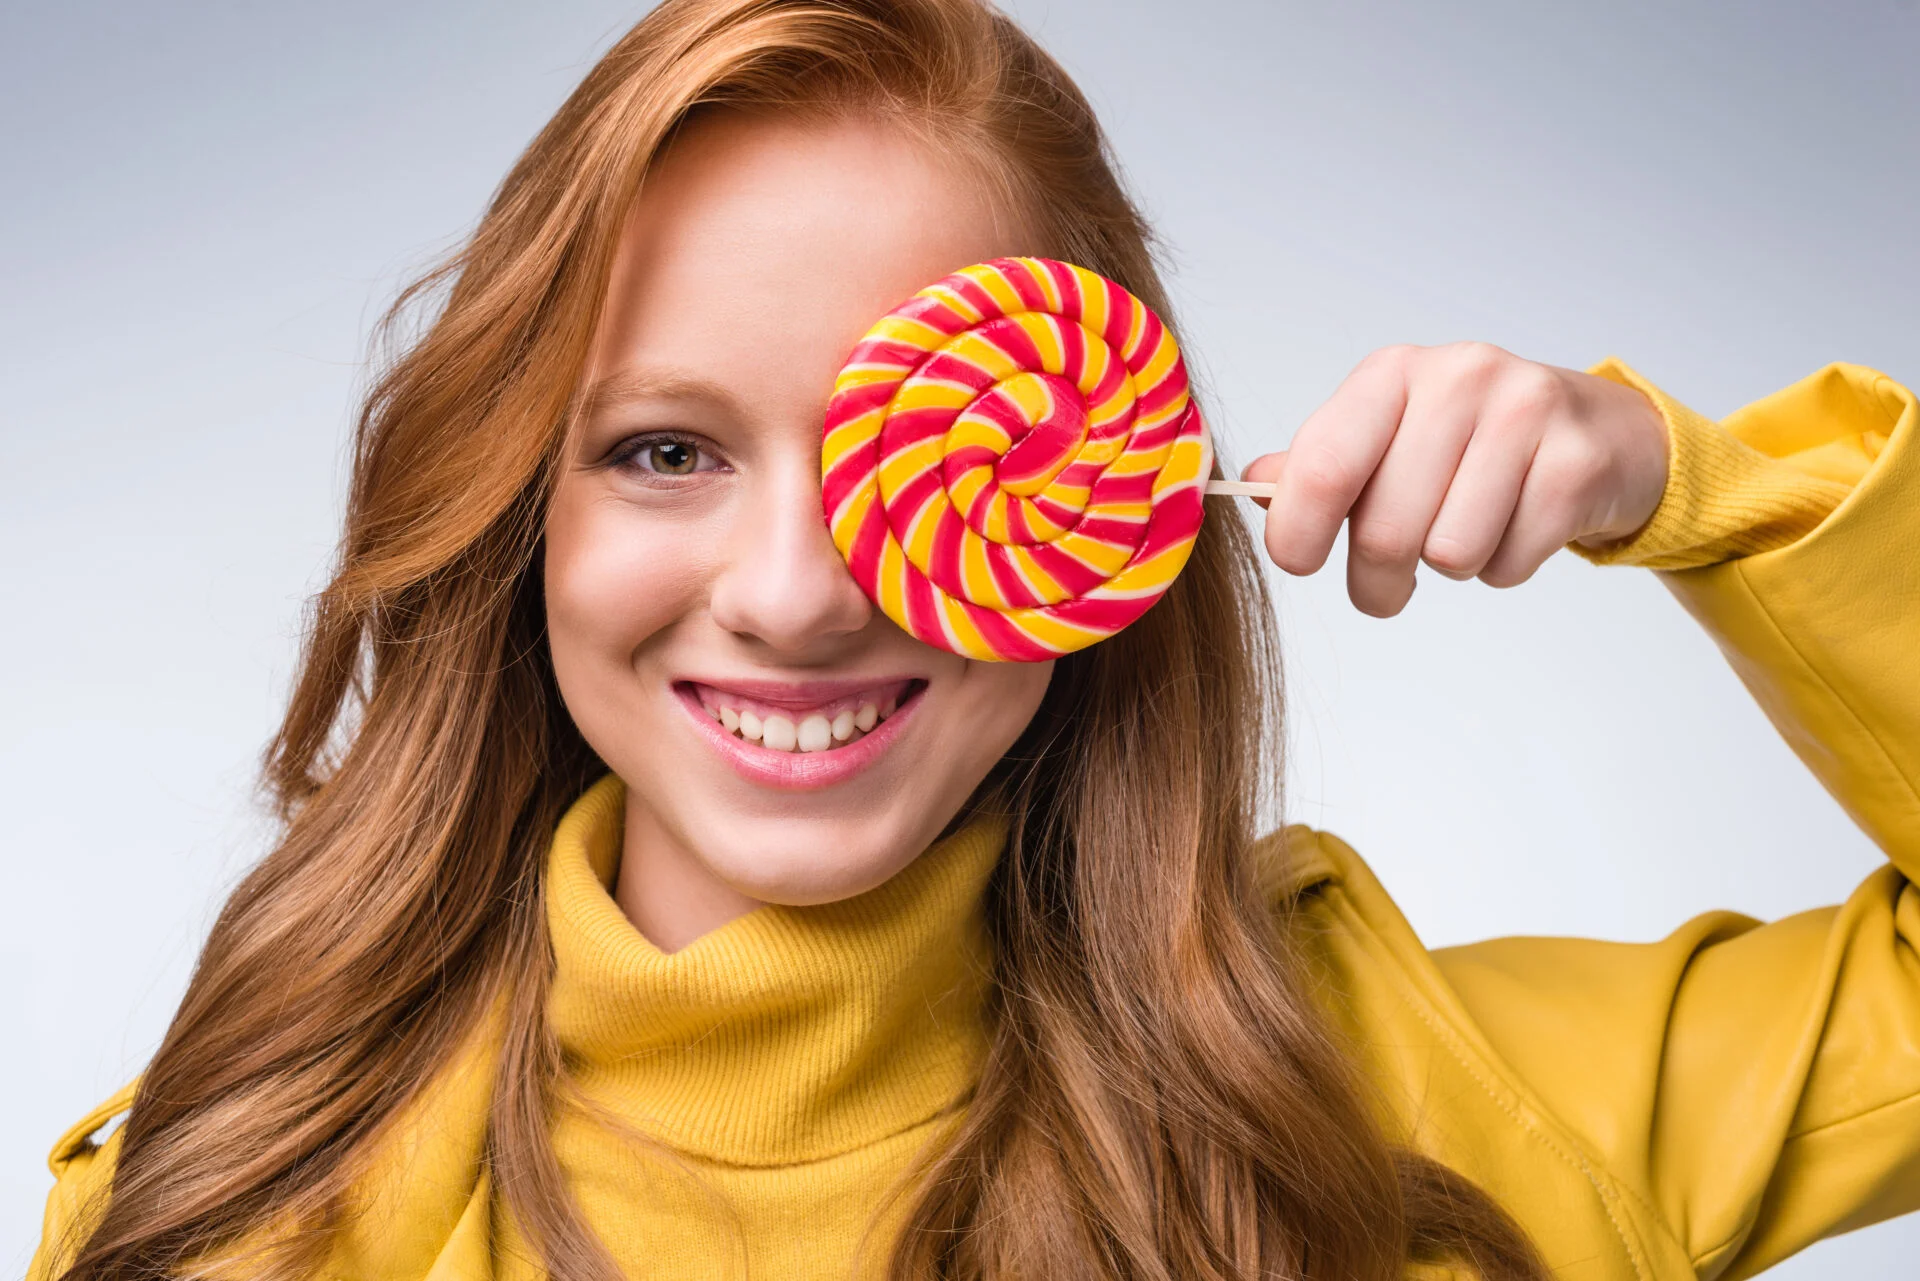 Redhead holding lollipop without titanium dioxide